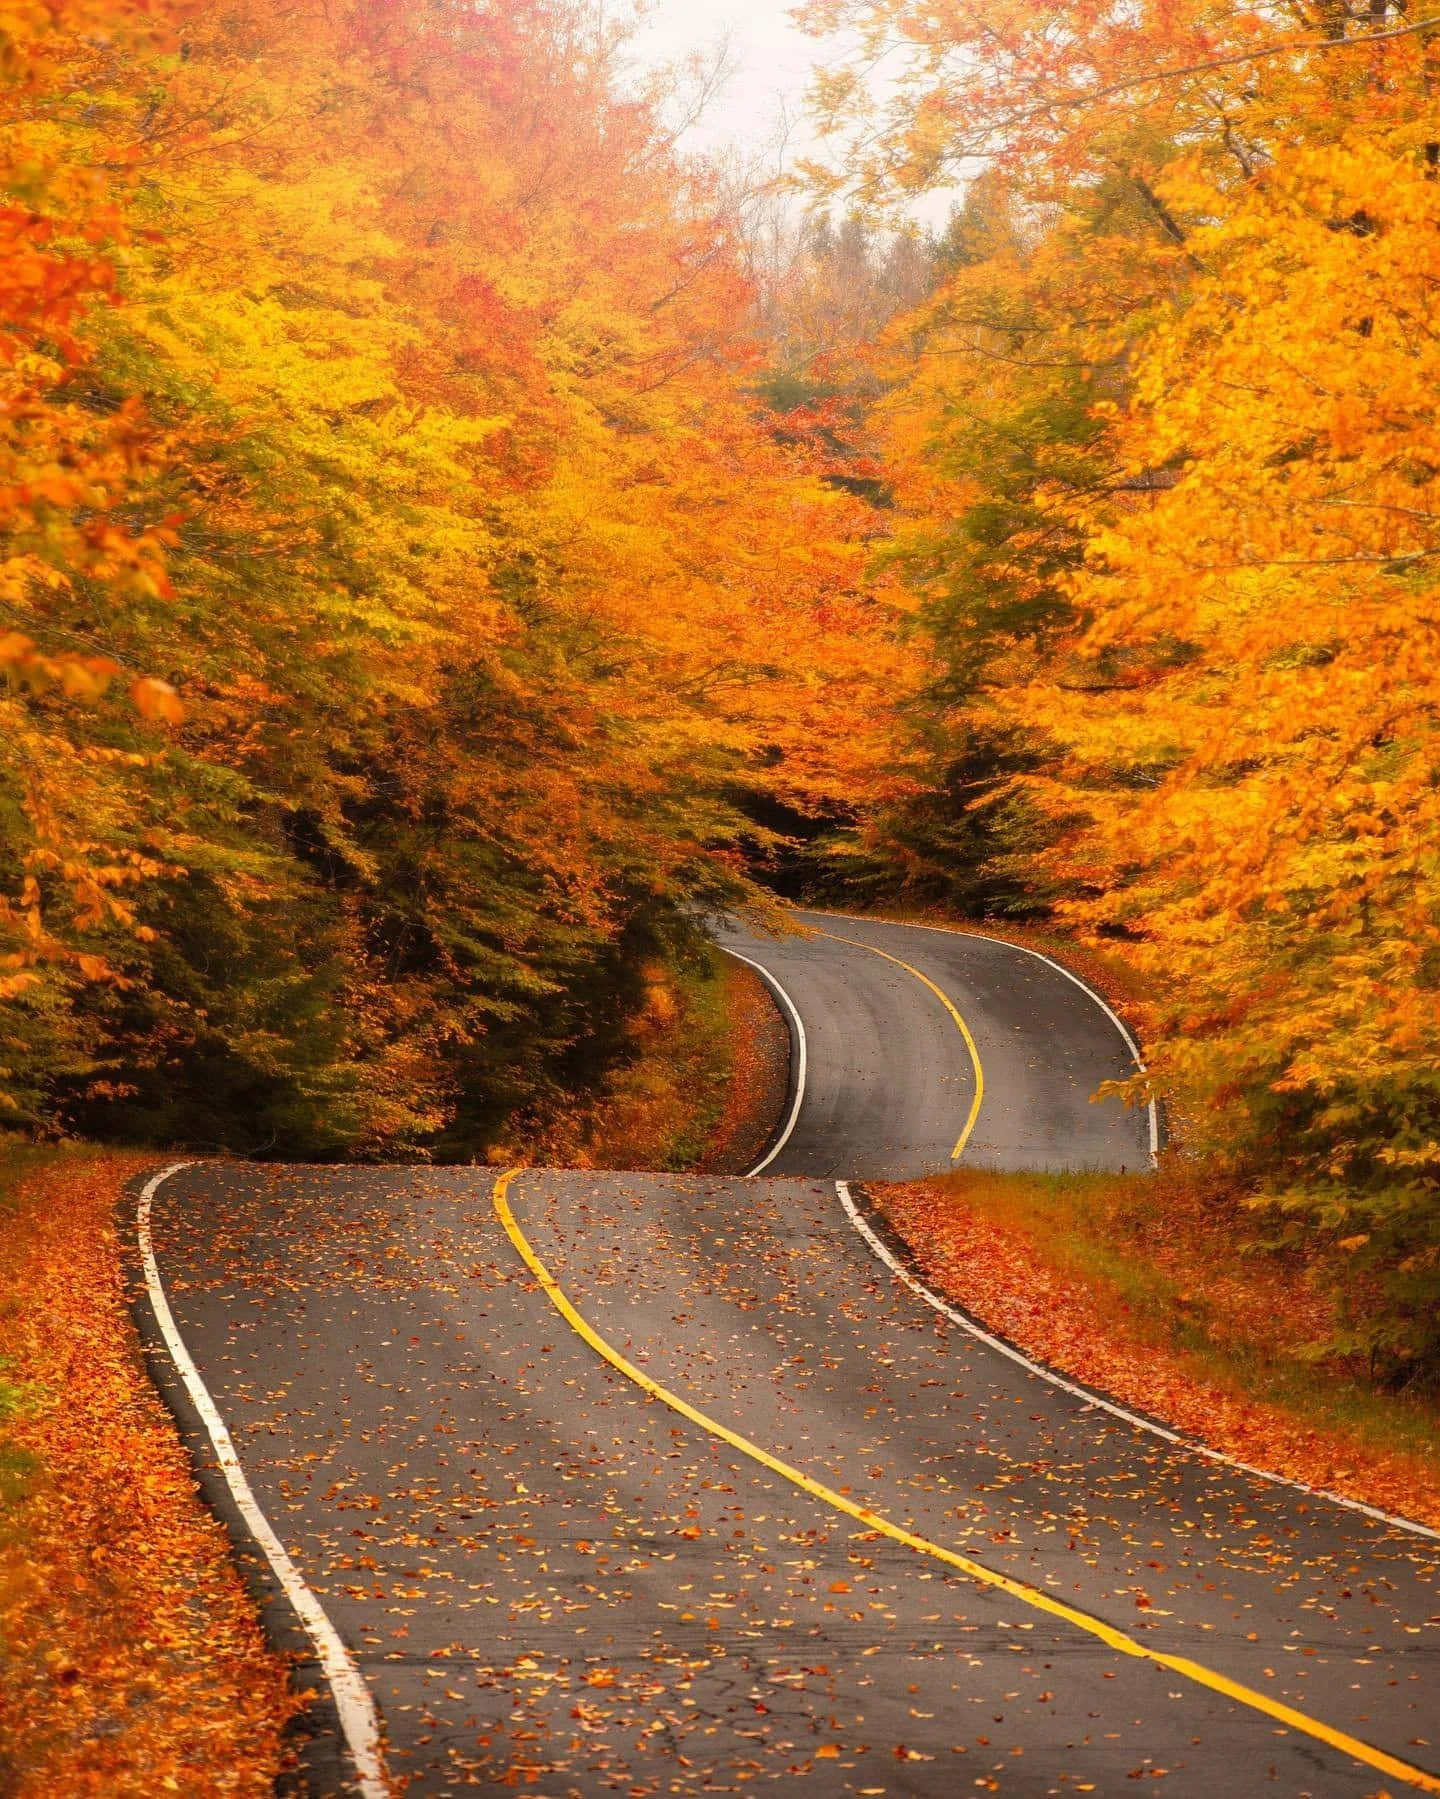 Autumn Road Surroundedby Fall Foliage Wallpaper